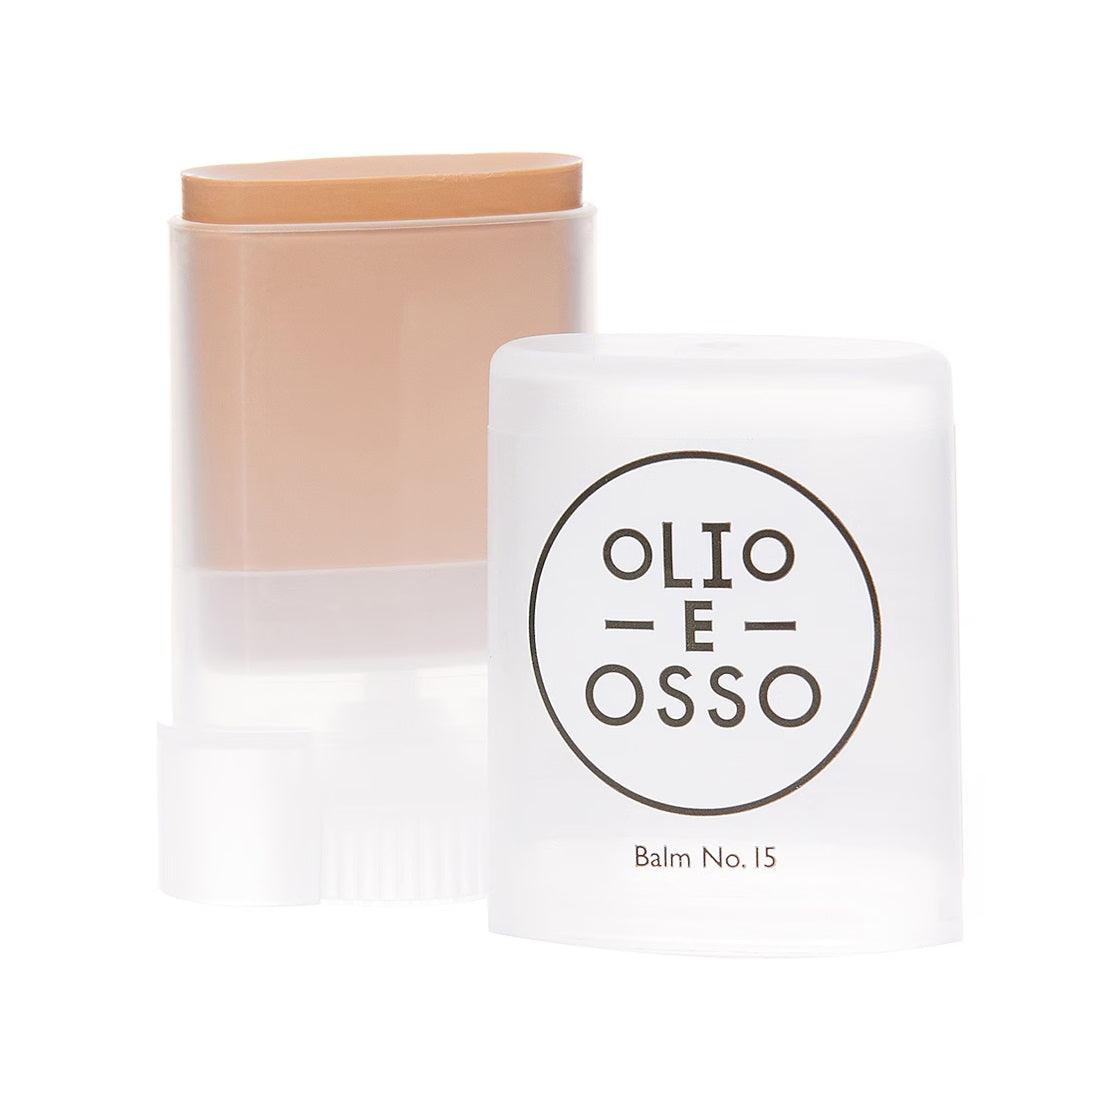 Olio E Osso Lip and Cheek Balm 10g - 15 Honey